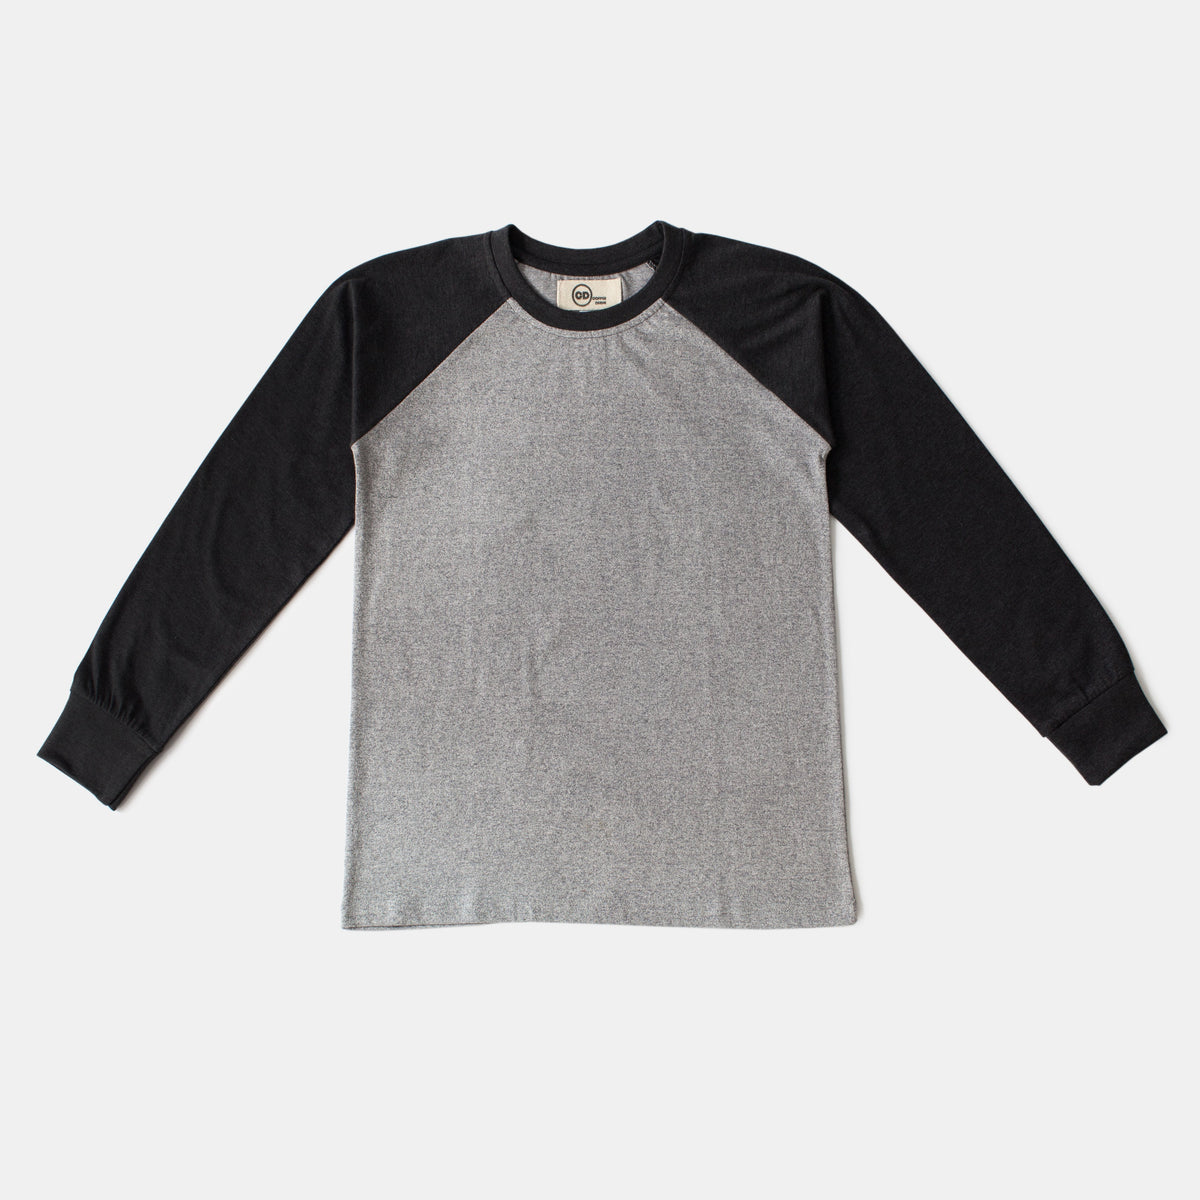 Boys Light Gray/Black Long Sleeve Baseball Style Raglan Shirt, Sz 8-16 ...